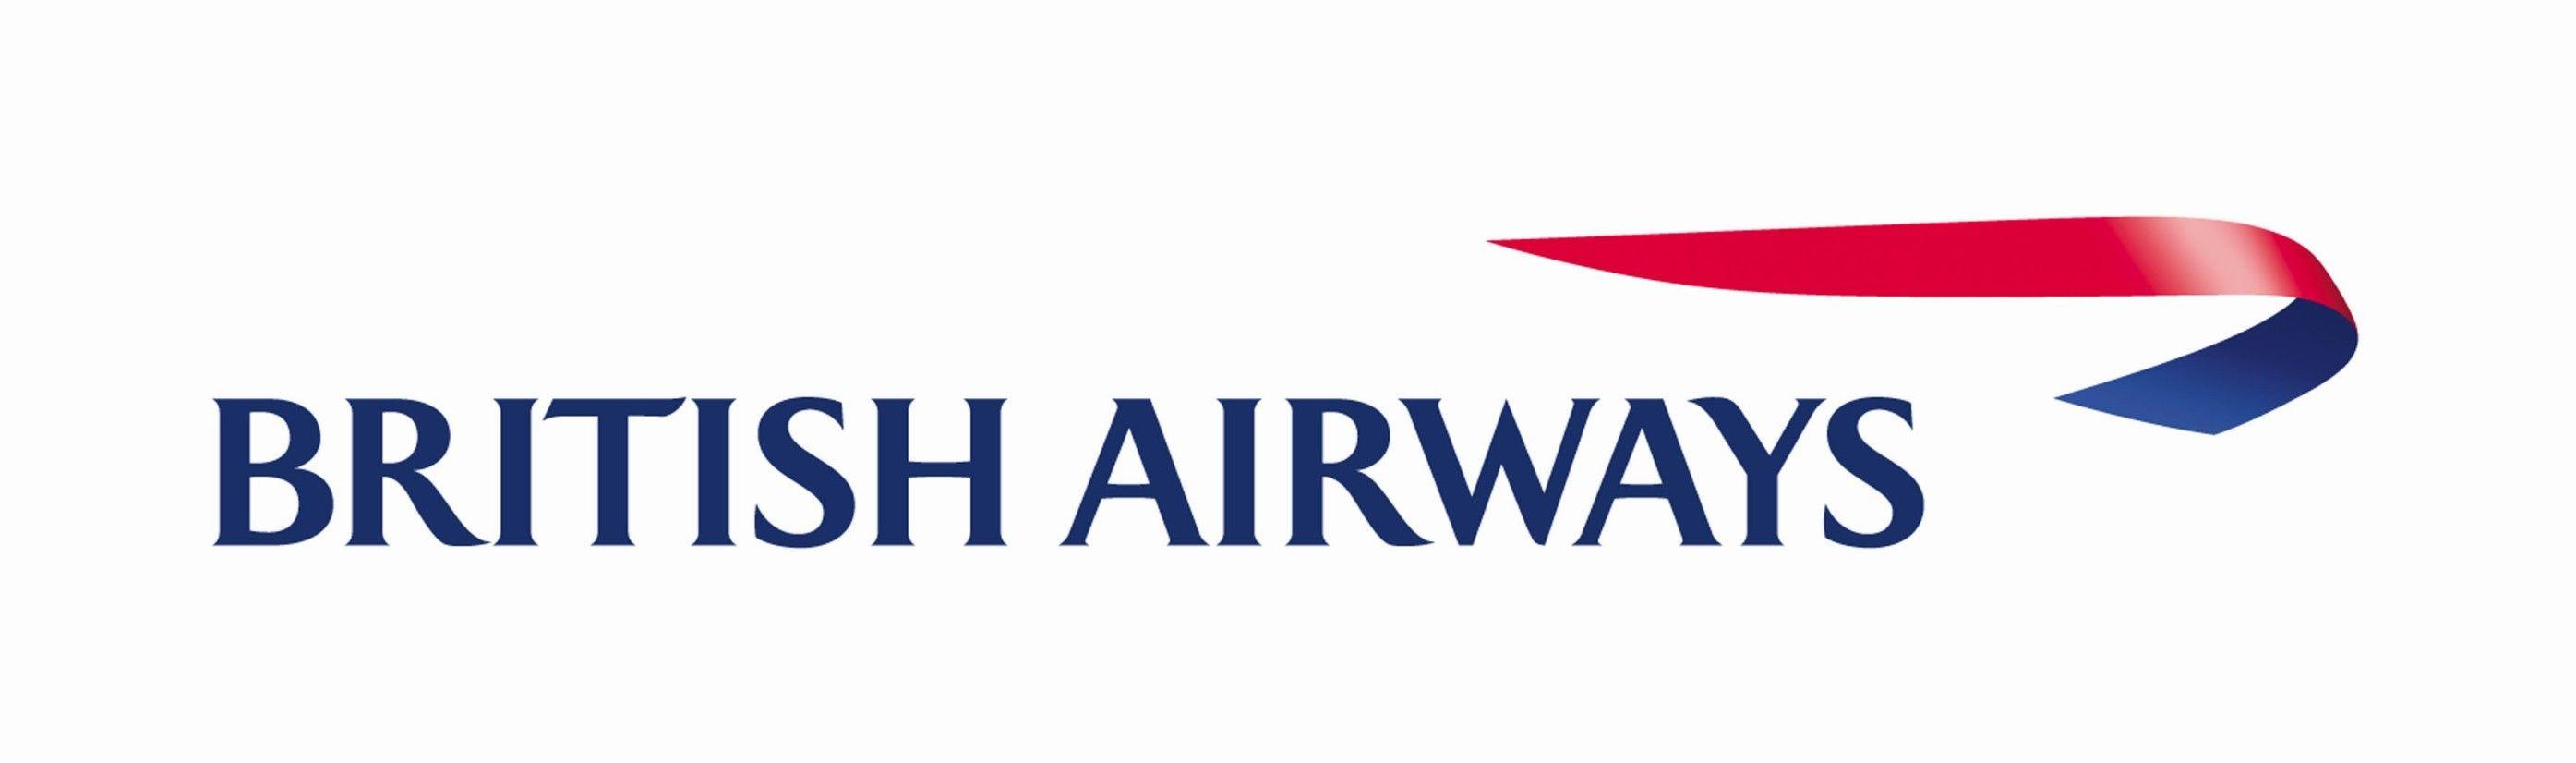 British Airways Logo - British Airways Logo - Cyprus Mail